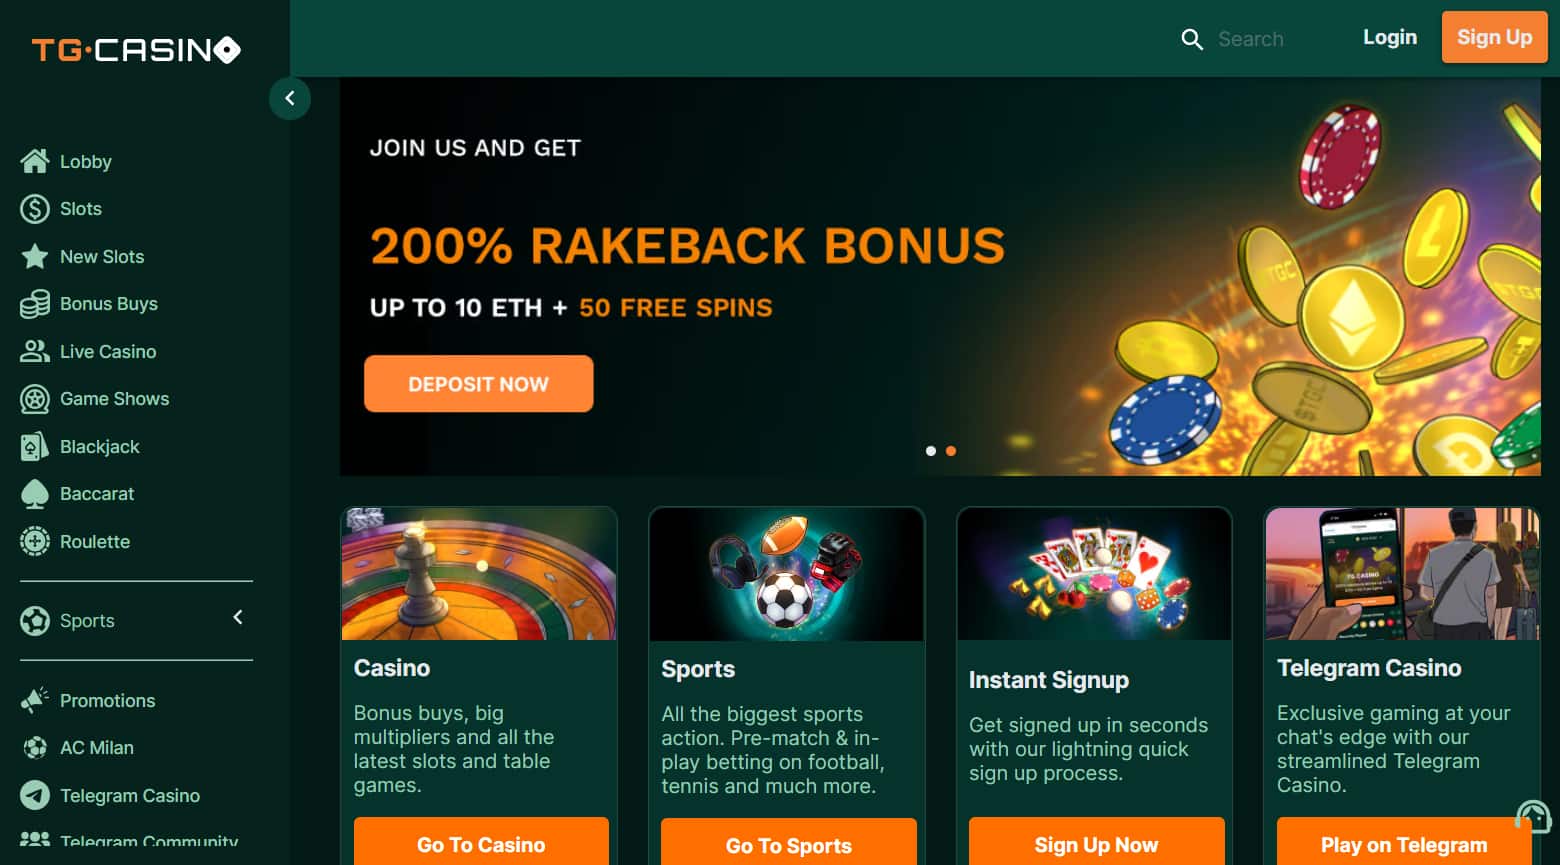 tg-casino-welcome-offer.jpg